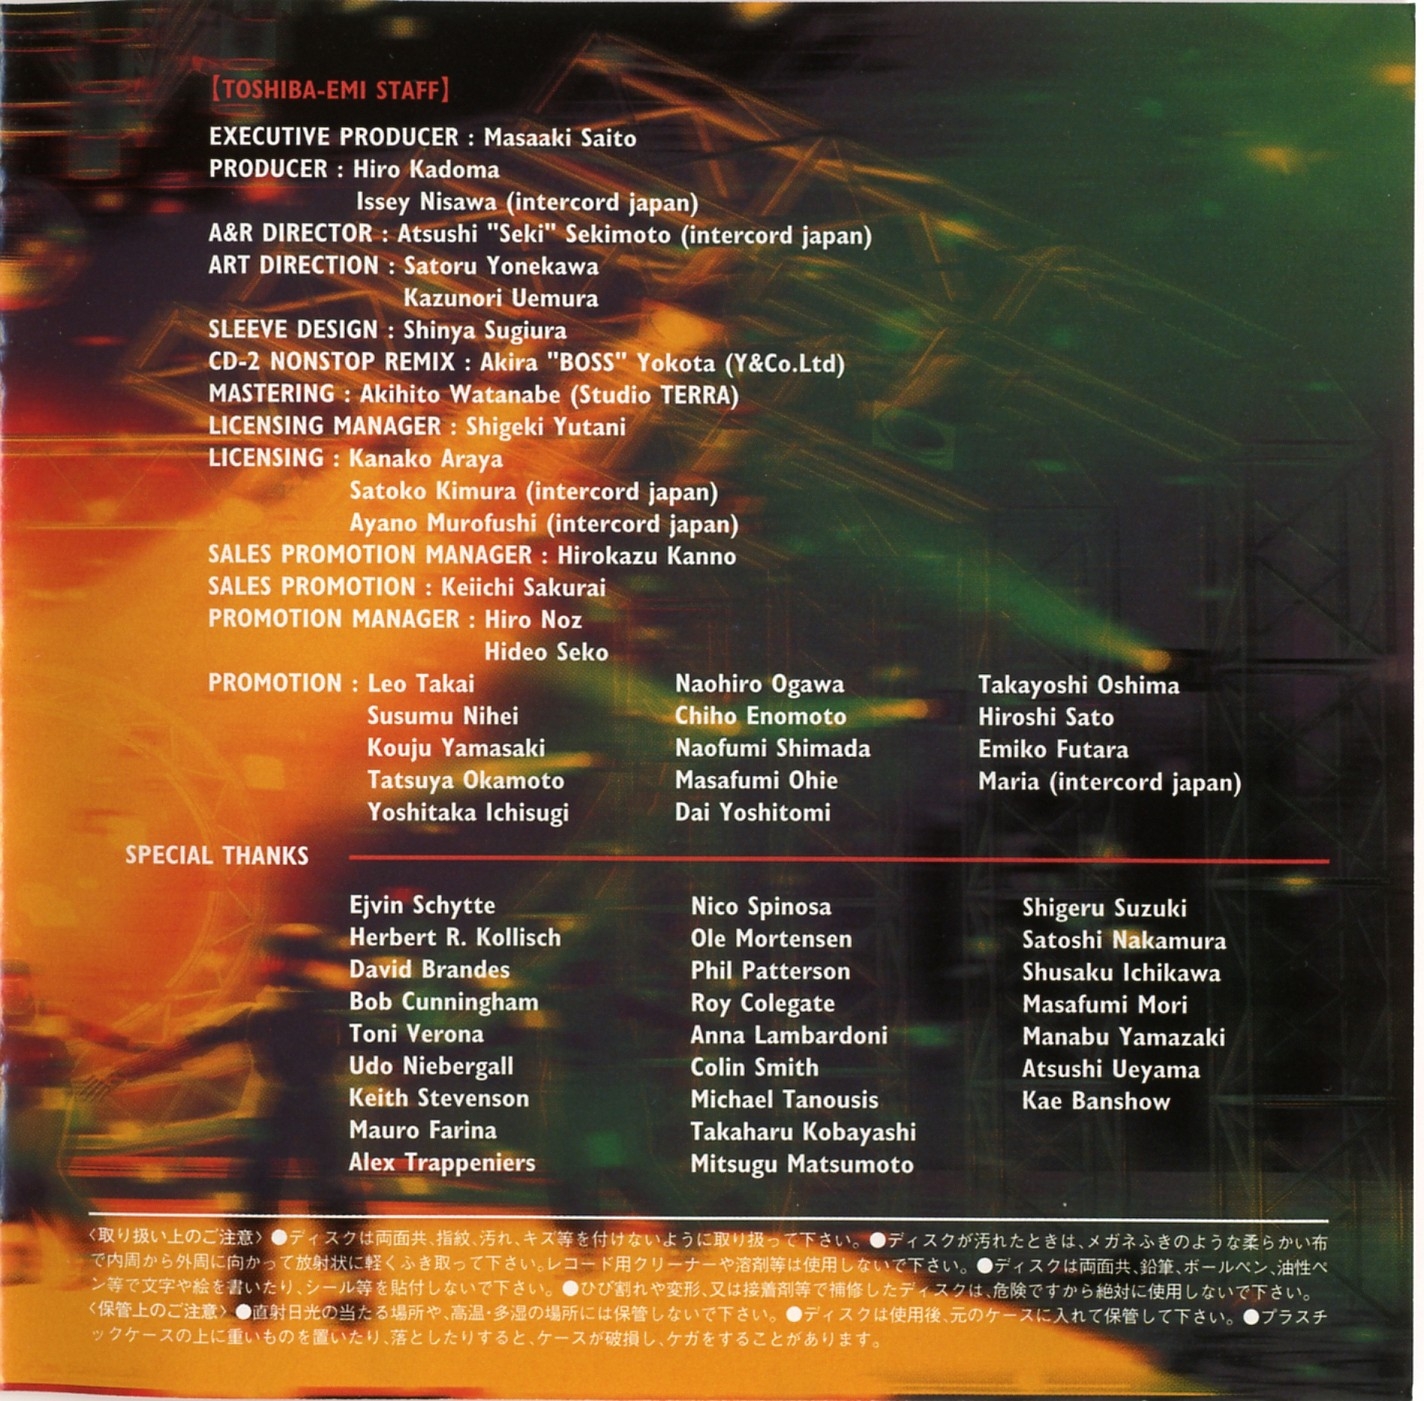 Dance Dance Revolution 4thMIX ORIGINAL SOUNDTRACK (2001) MP3 